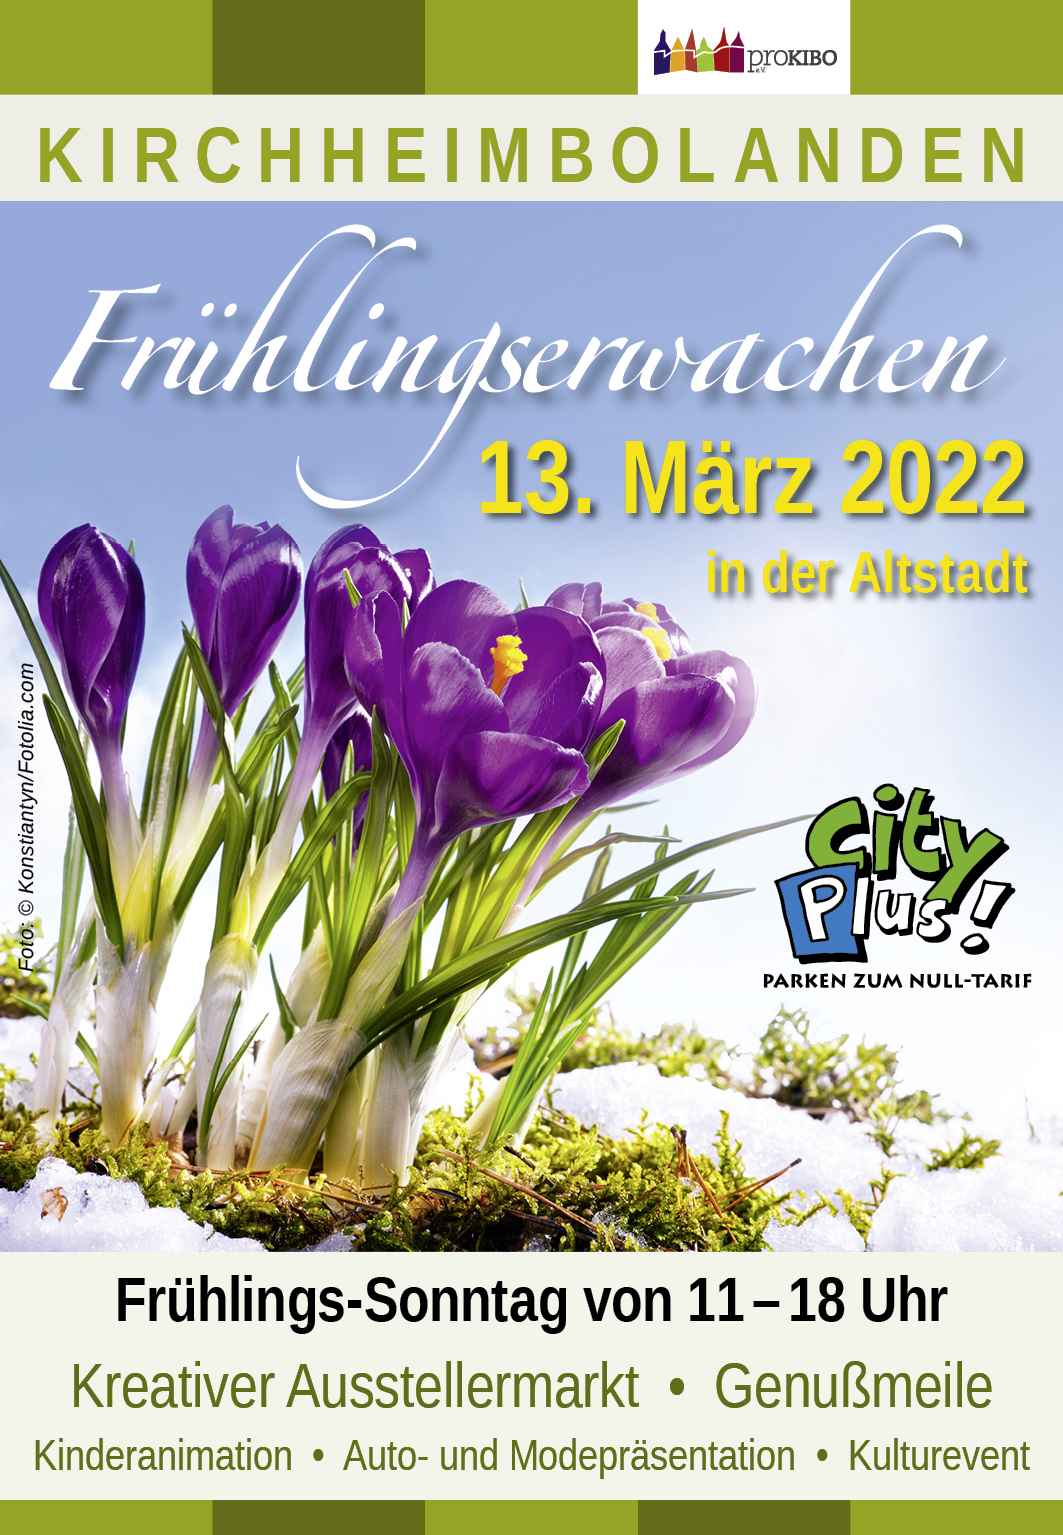 Frühlingserwachen am 13.03.2022 in Kirchheimbolanden mit proKIBO e.V.